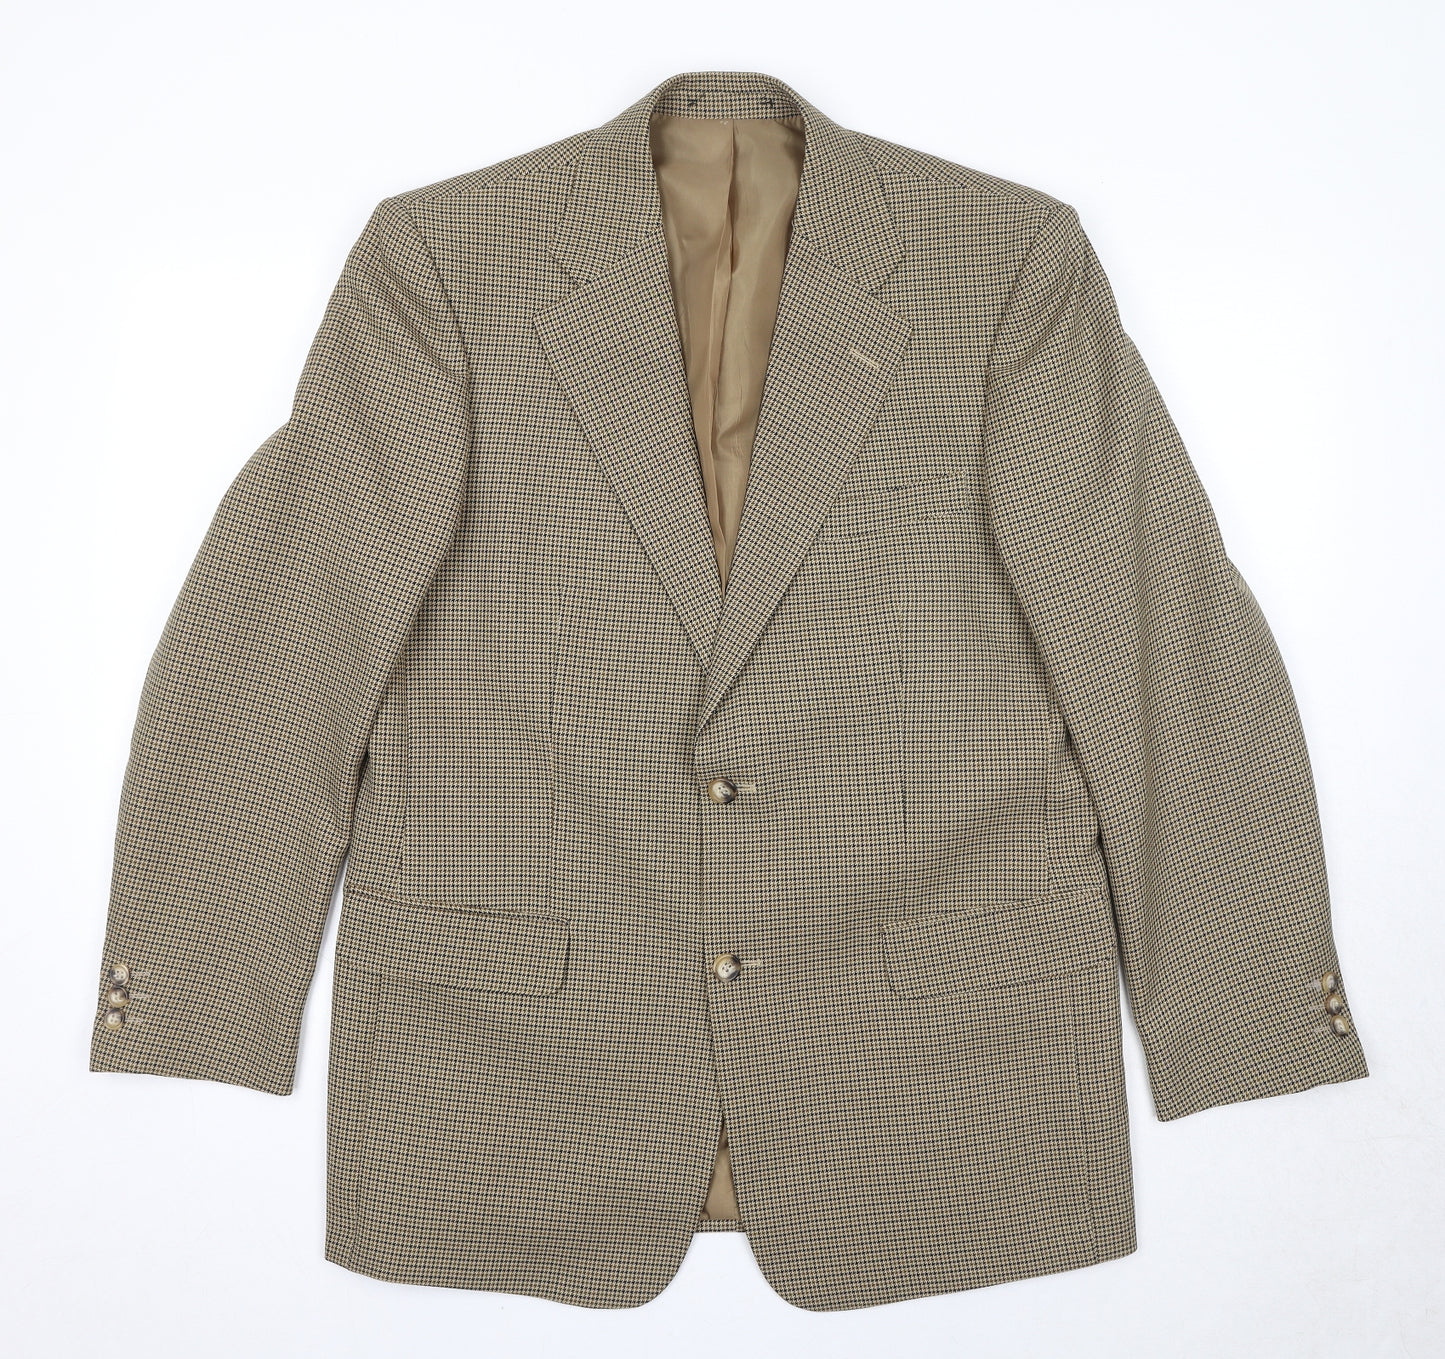 First Impressions Mens Gold Geometric Polyester Jacket Suit Jacket Size 40 Regular